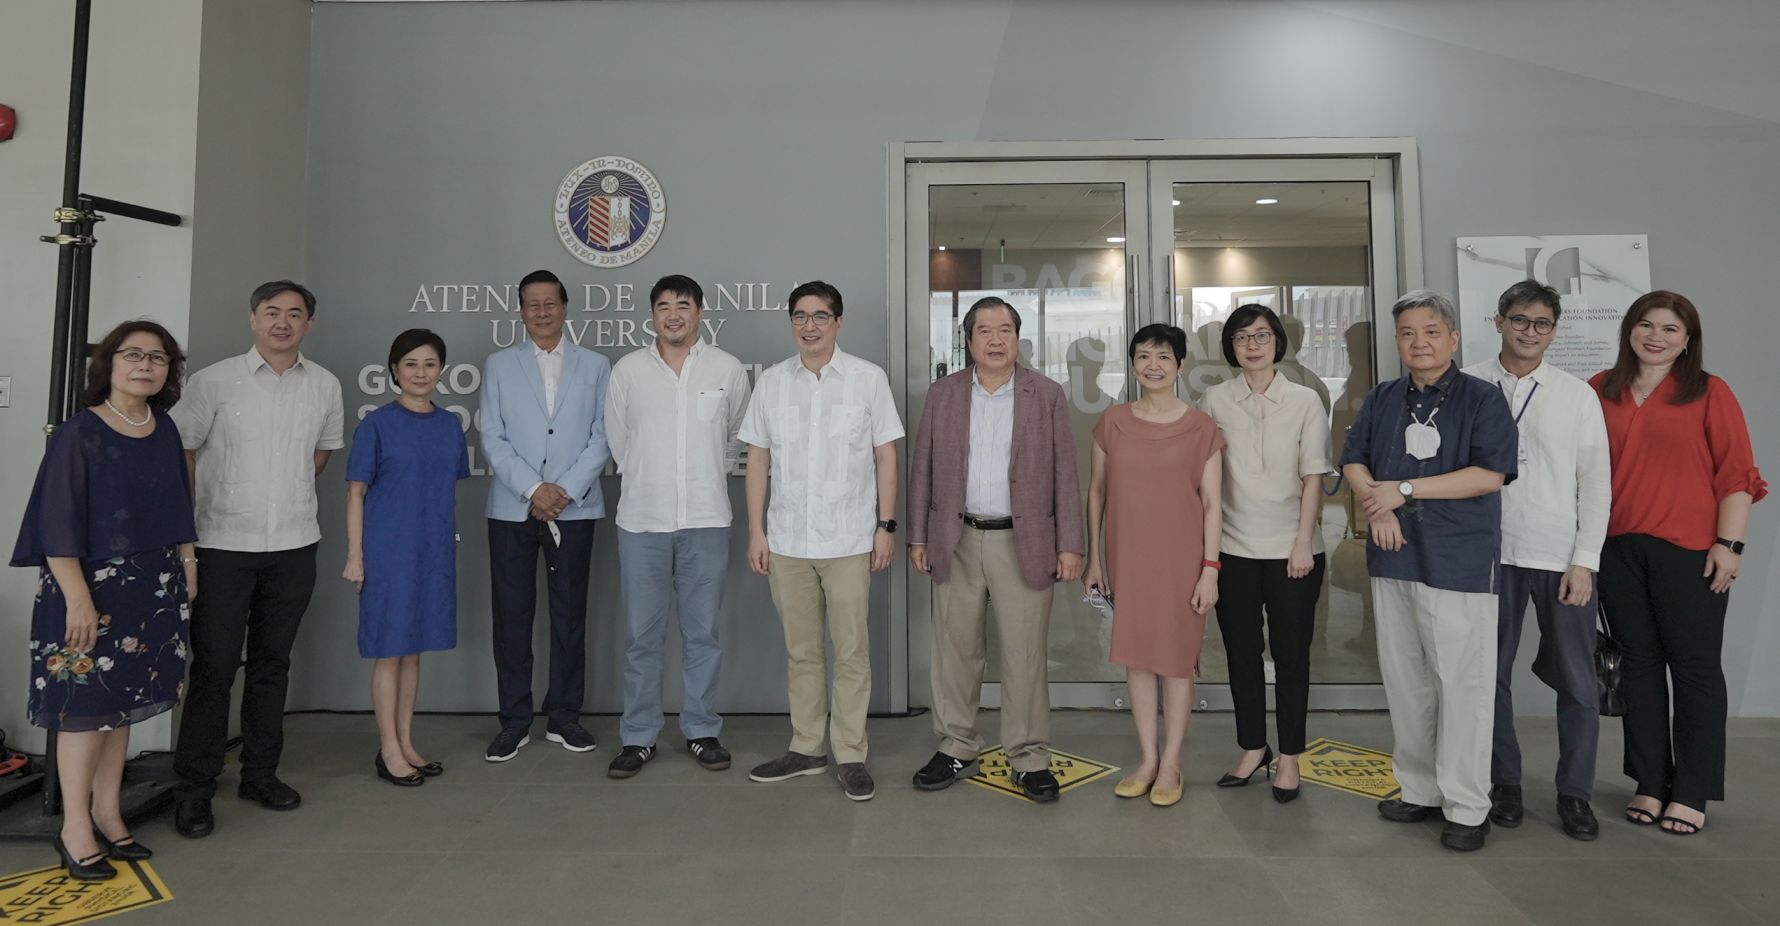  Gokongwei Brothers Foundation, Ateneo de Manila Celebrates 20th Anniversary of School of Management and the Dedication of School of Education and Learning Design